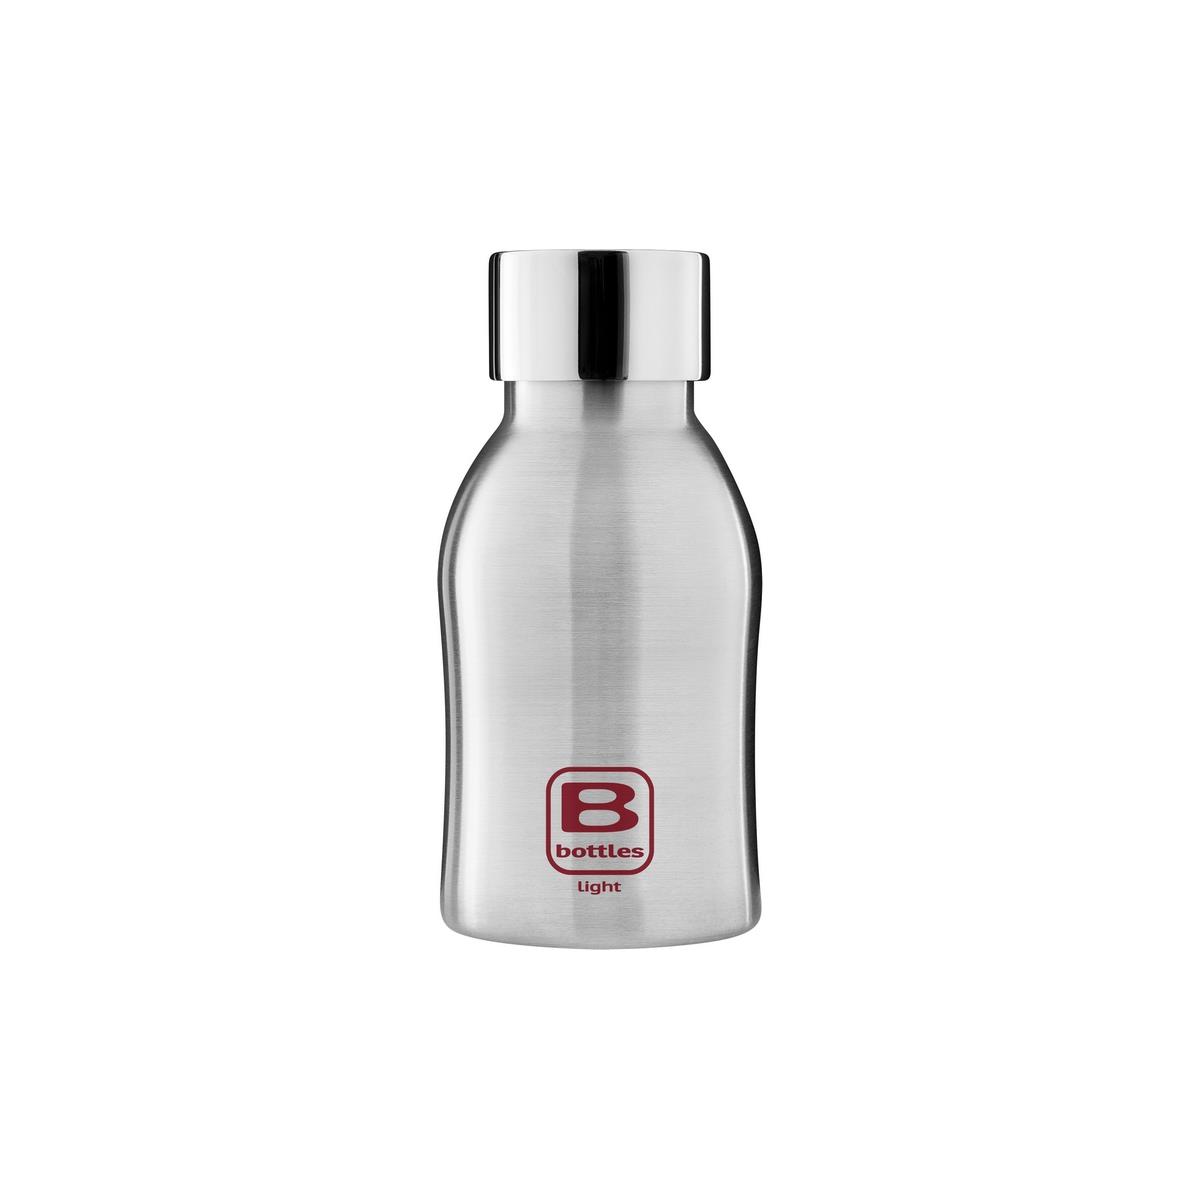 photo B Bottles Light - Steel Brushed - 350 ml - Bottiglia in acciaio inox 18/10 ultra leggera e compatta